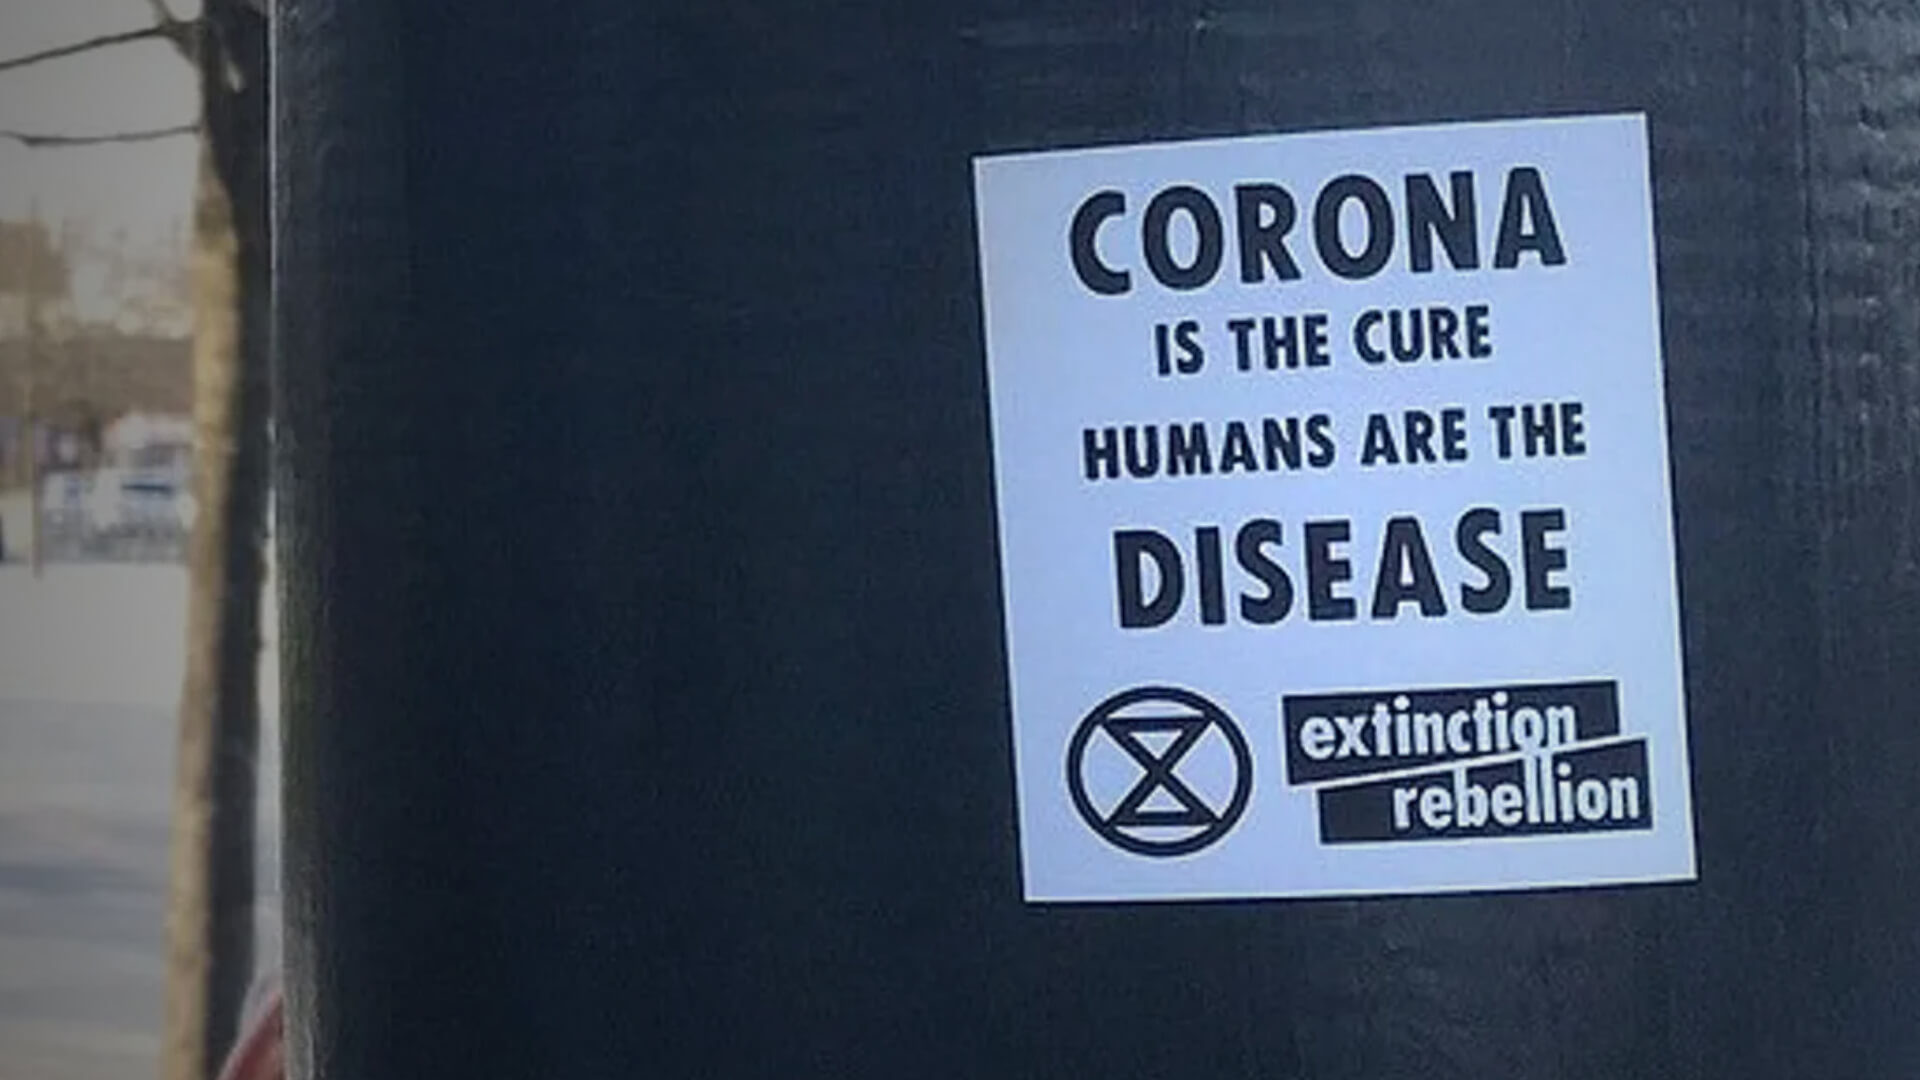 extinction rebellion corona cure